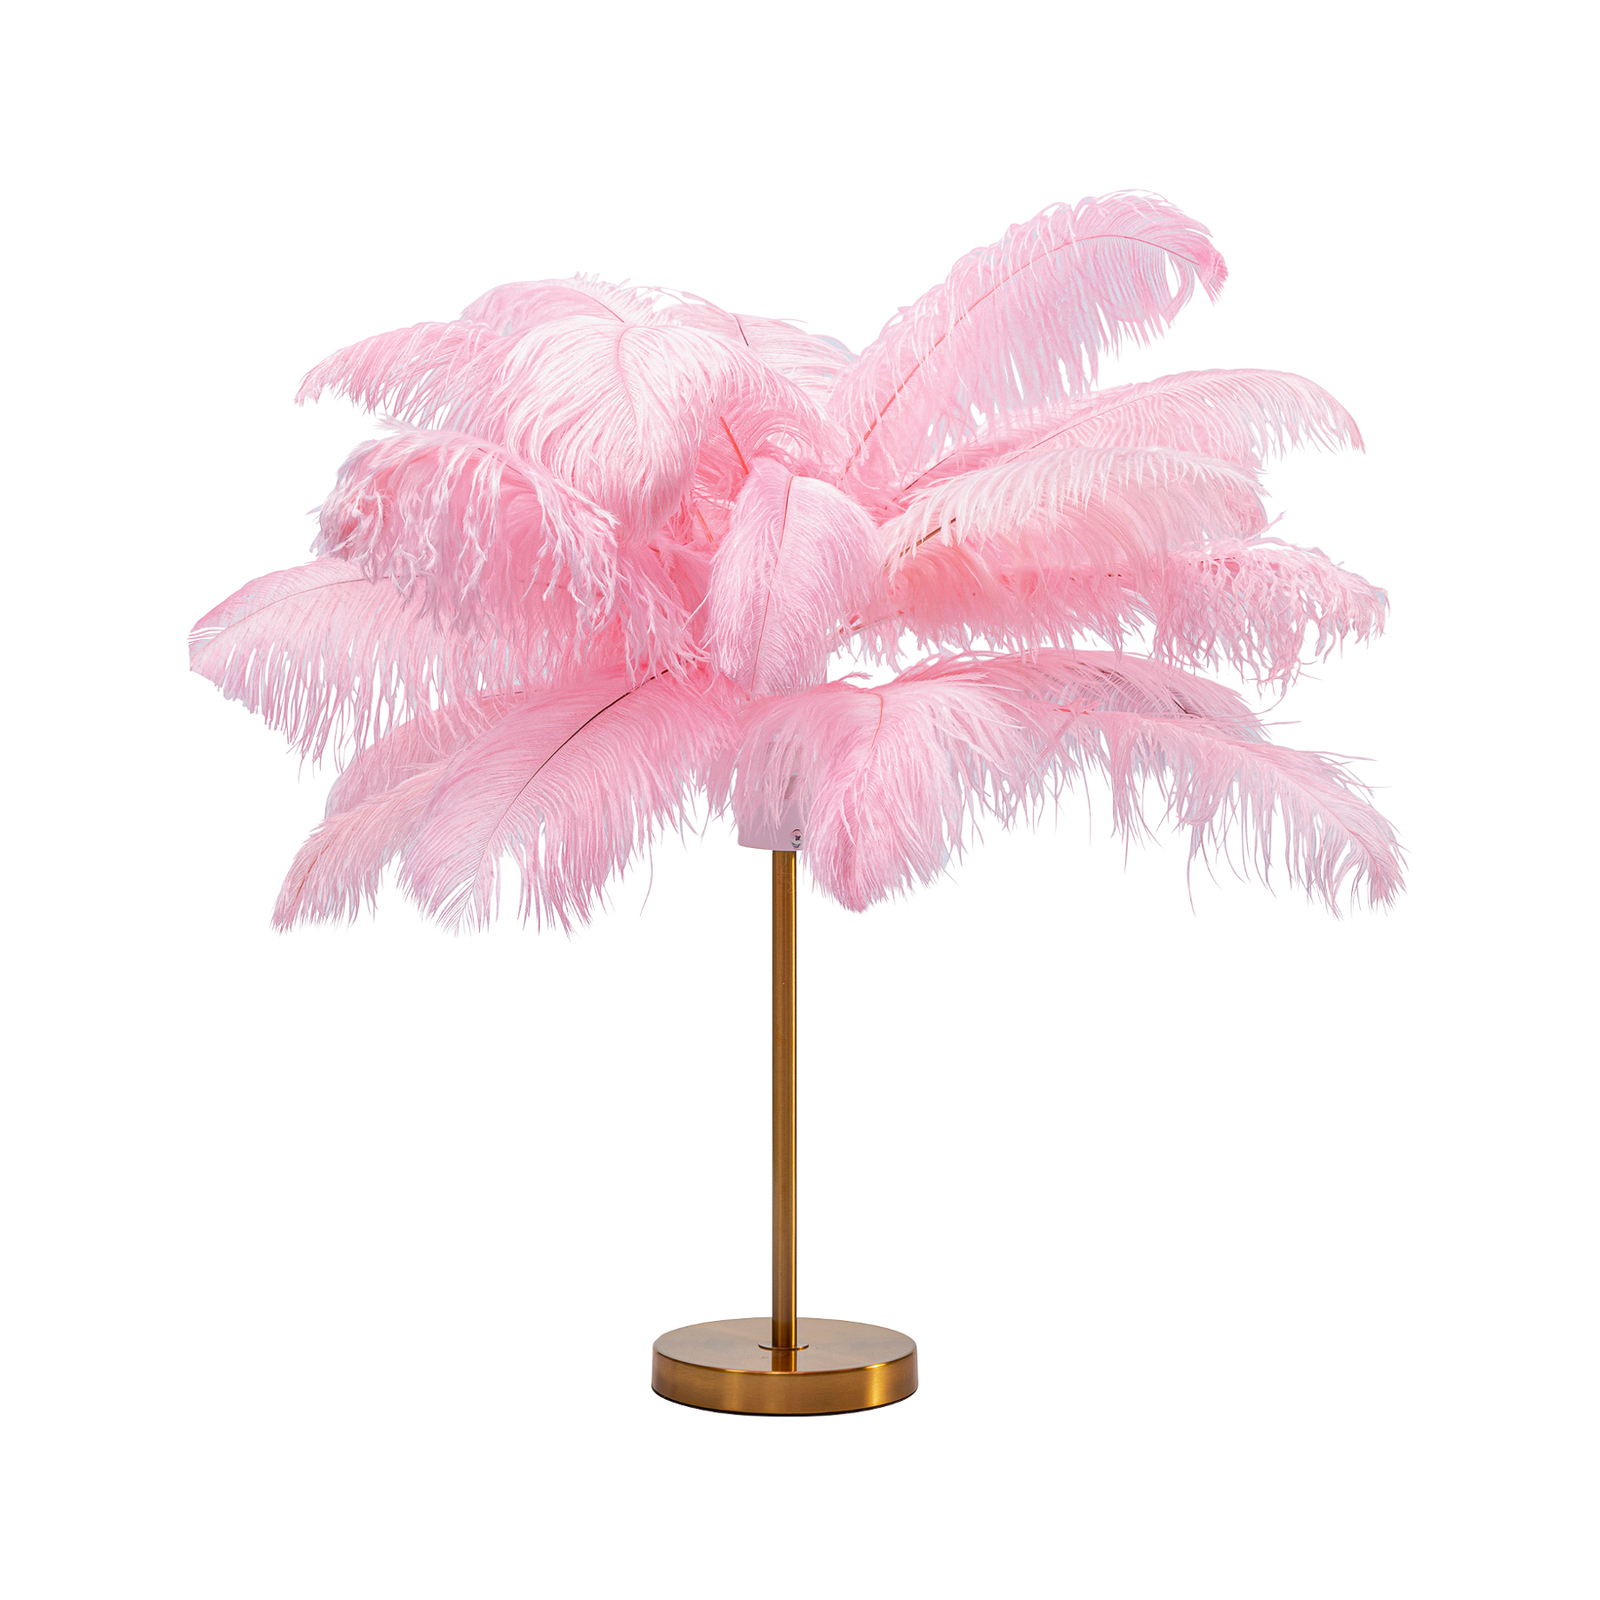 KARE Feather Palm lampada tavolo con piume, rosa